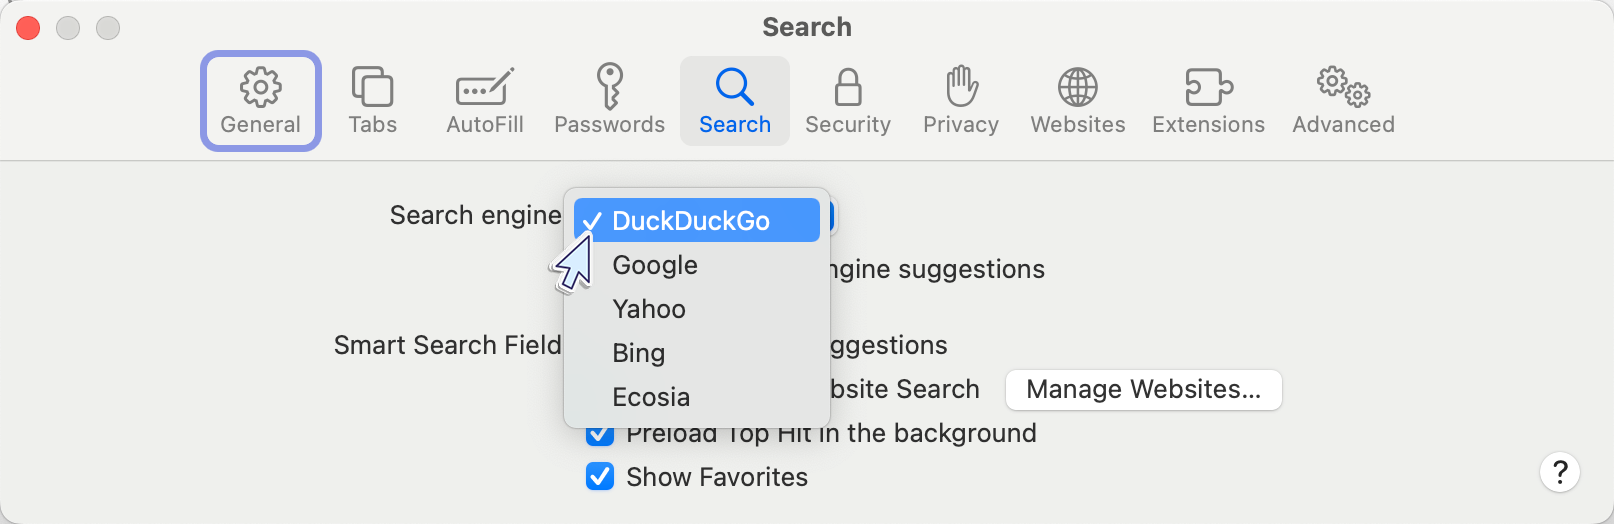 DuckDuckGo là gì? 1